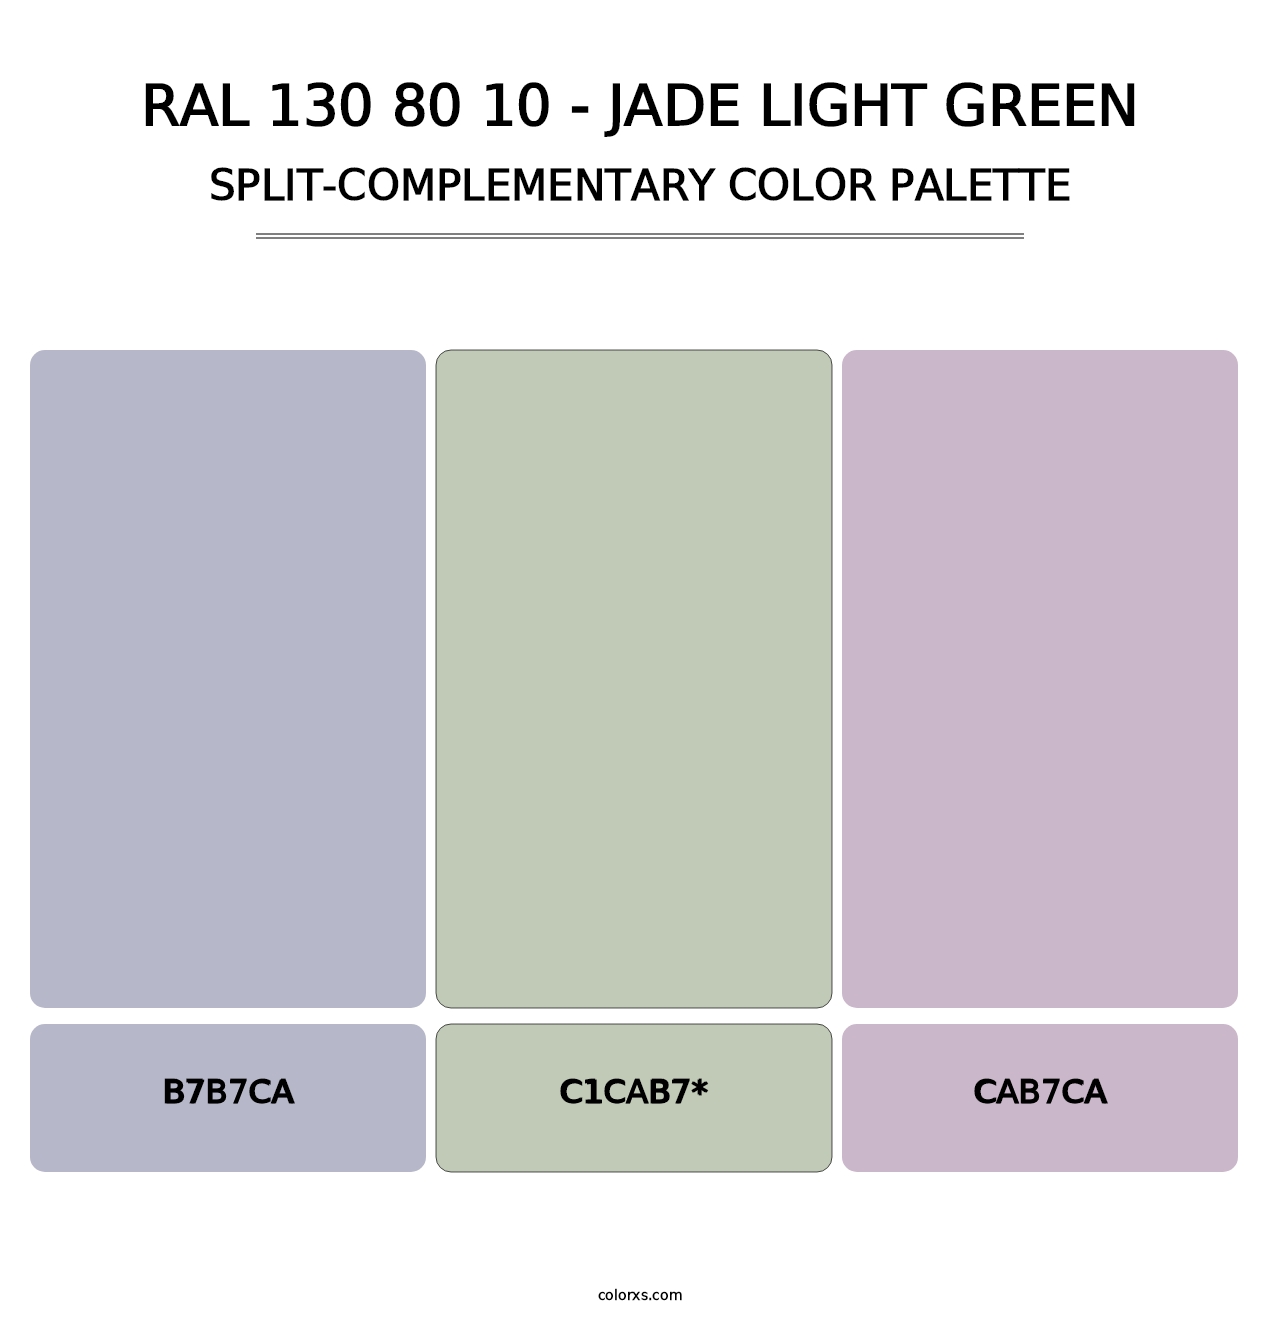 RAL 130 80 10 - Jade Light Green - Split-Complementary Color Palette